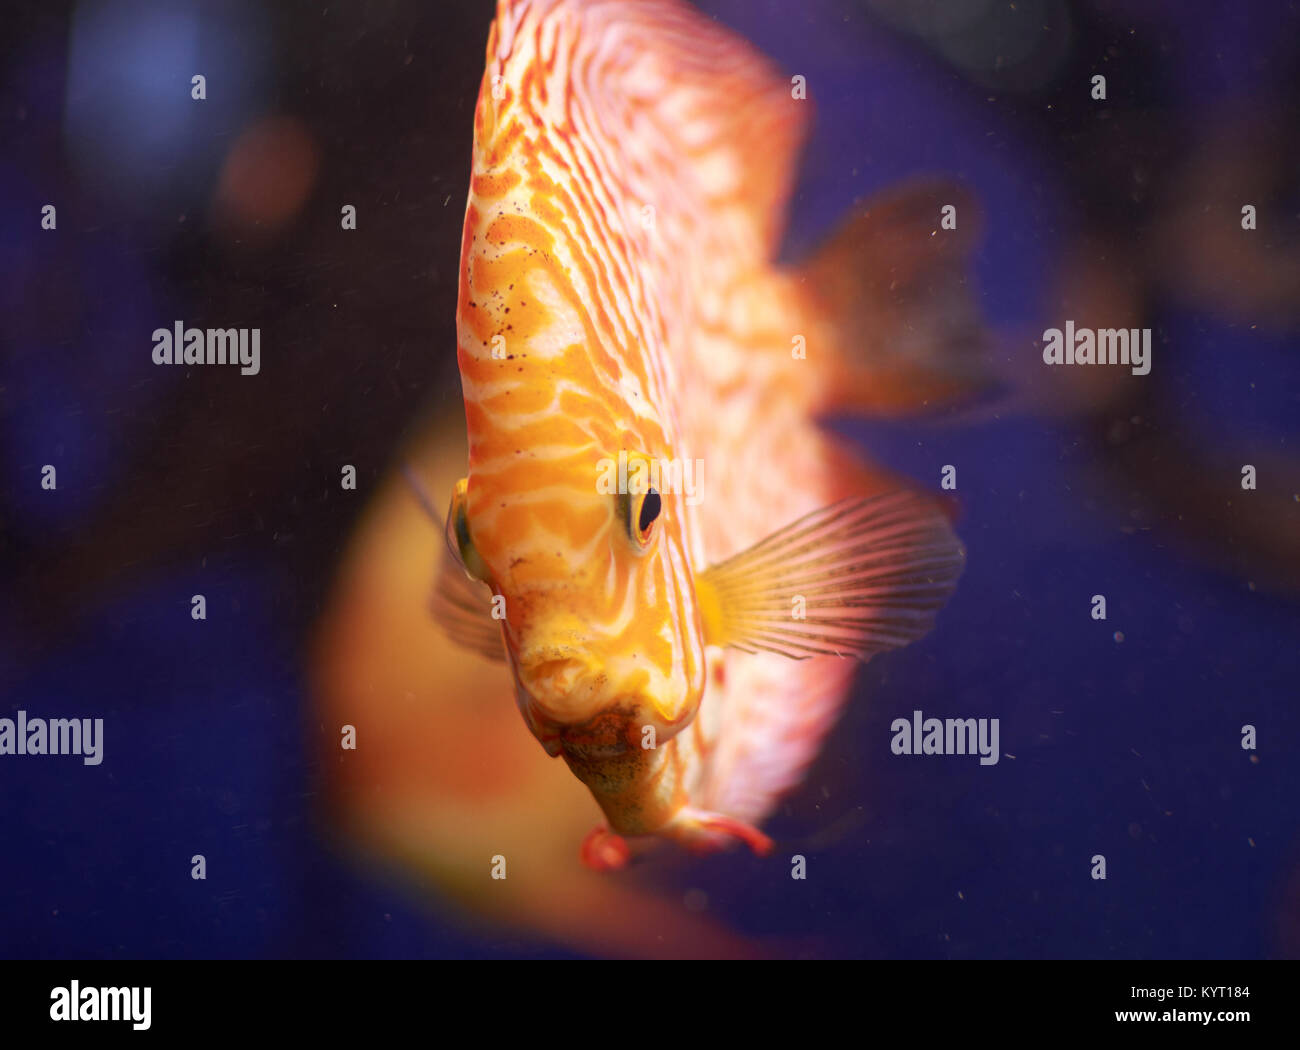 Symphysodon or Discus fish from Amazon river in aquarium Stock Photo